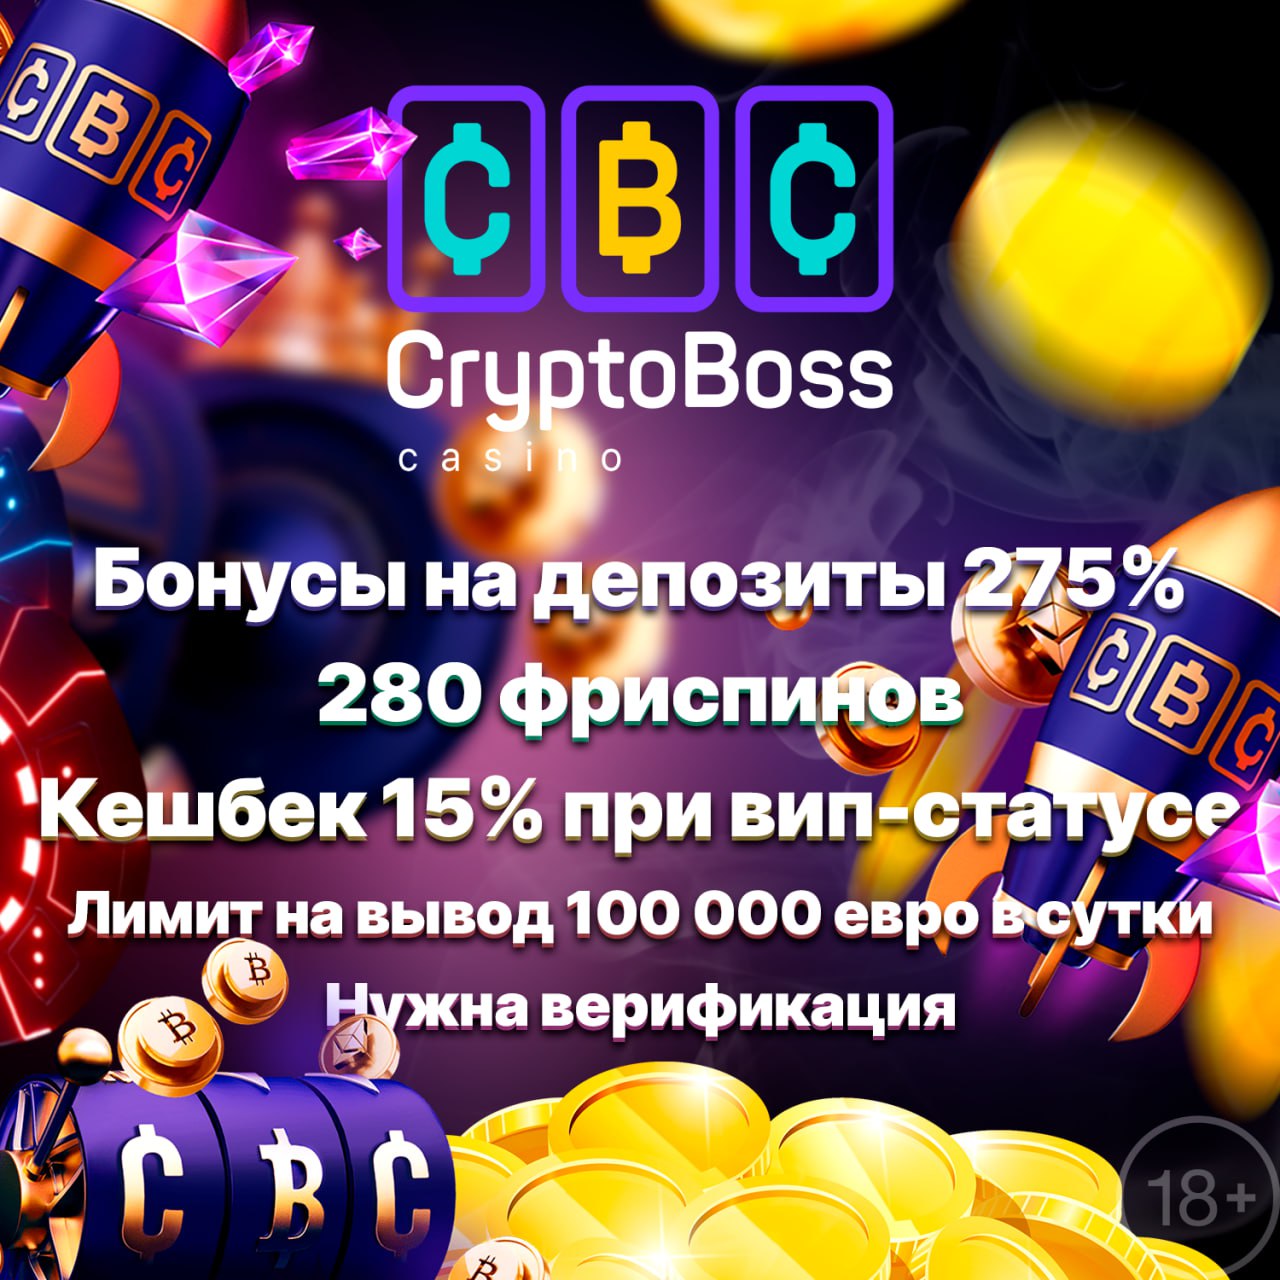 Cryptoboss casino как получить приветственный бонус